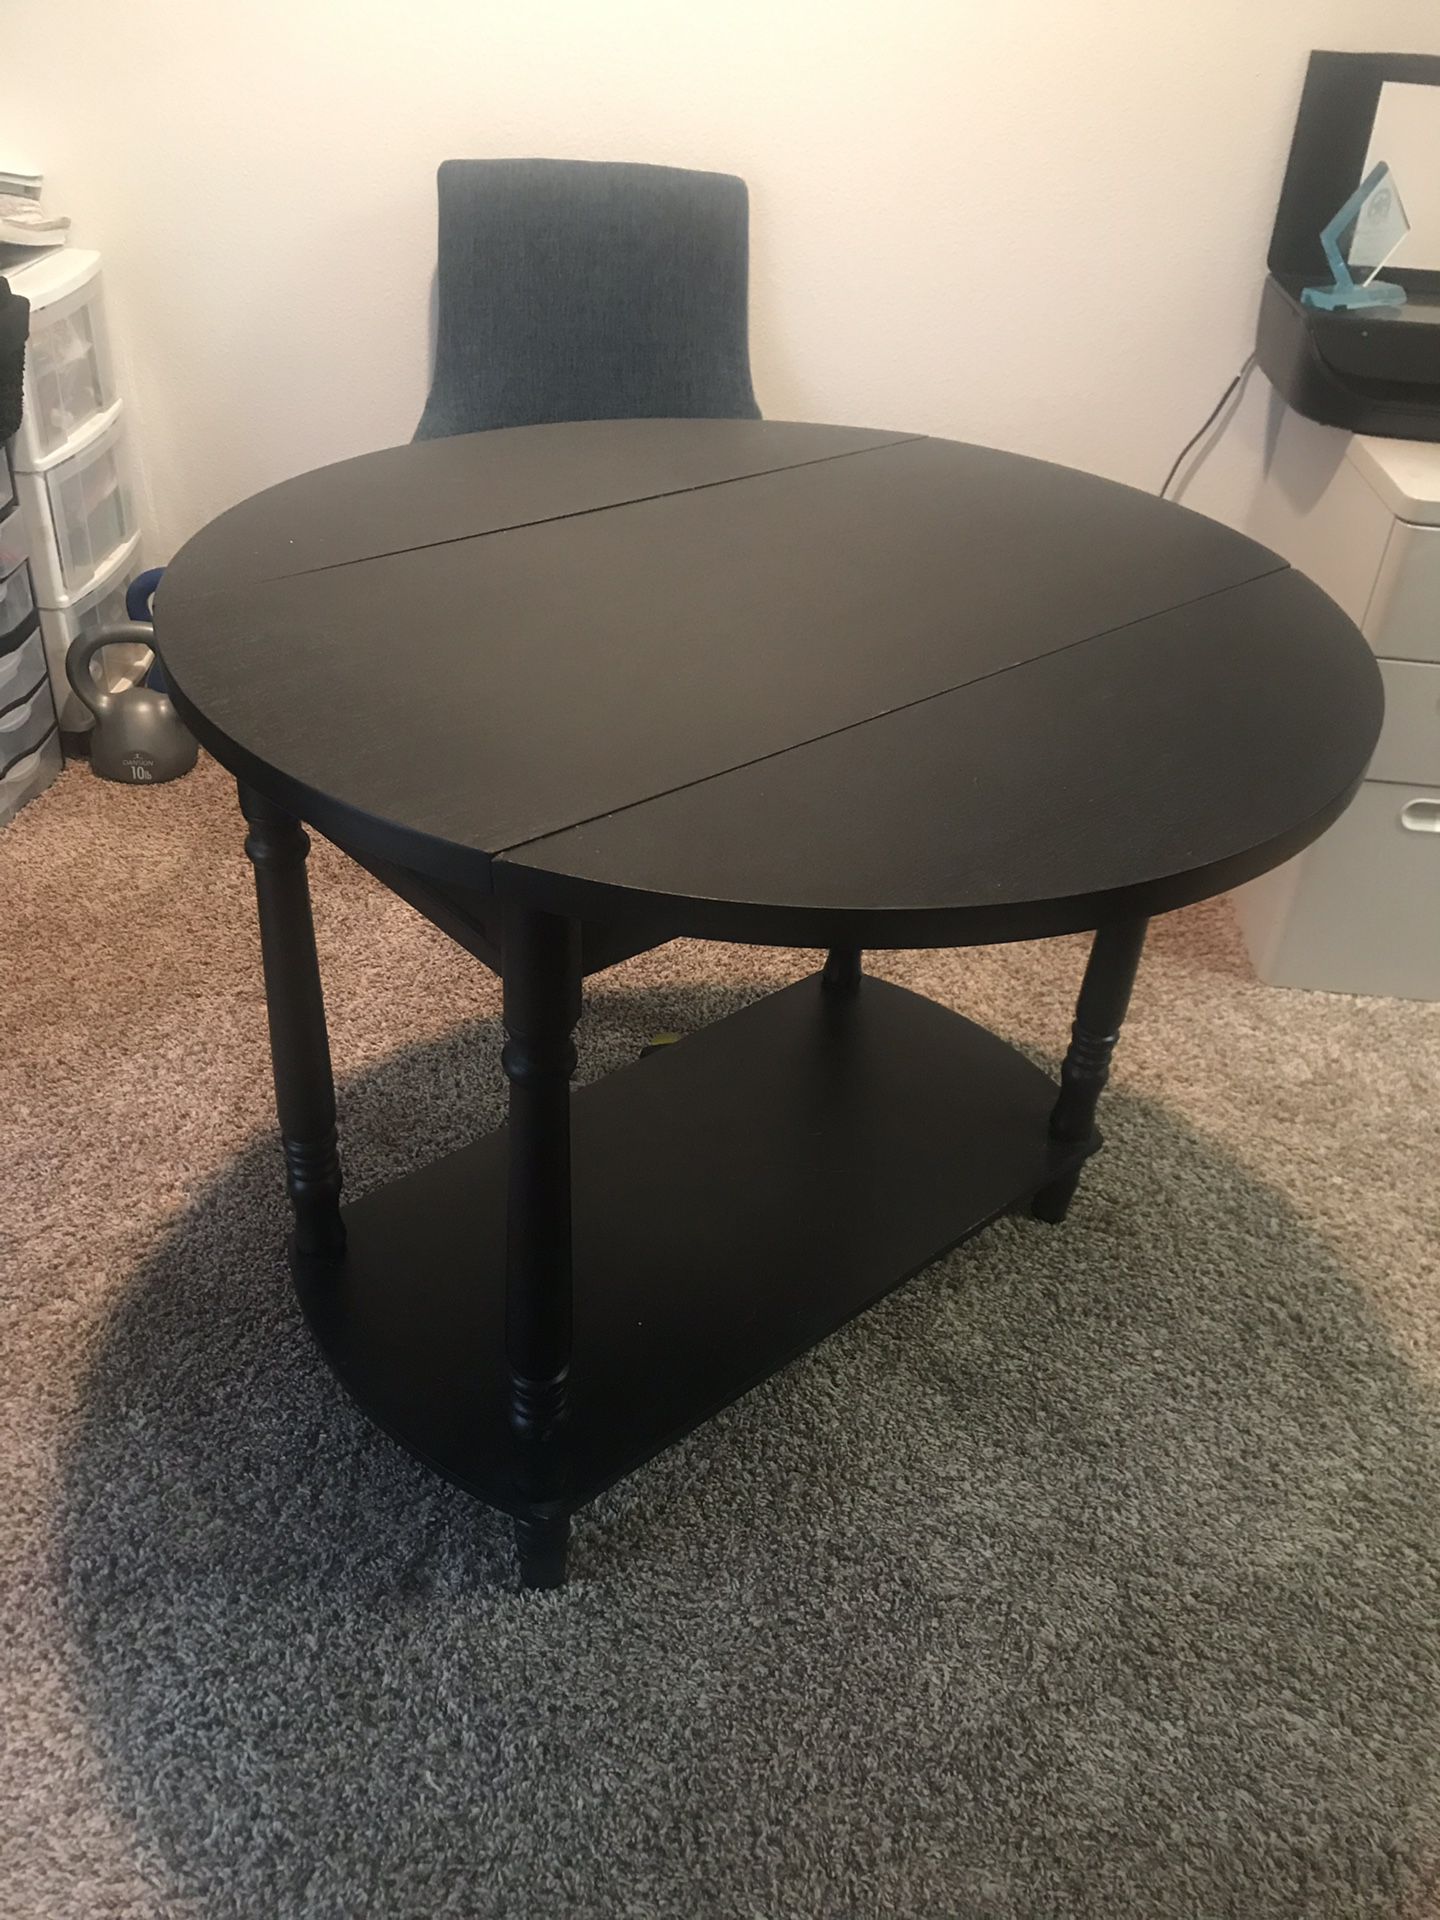 Black small kitchen table